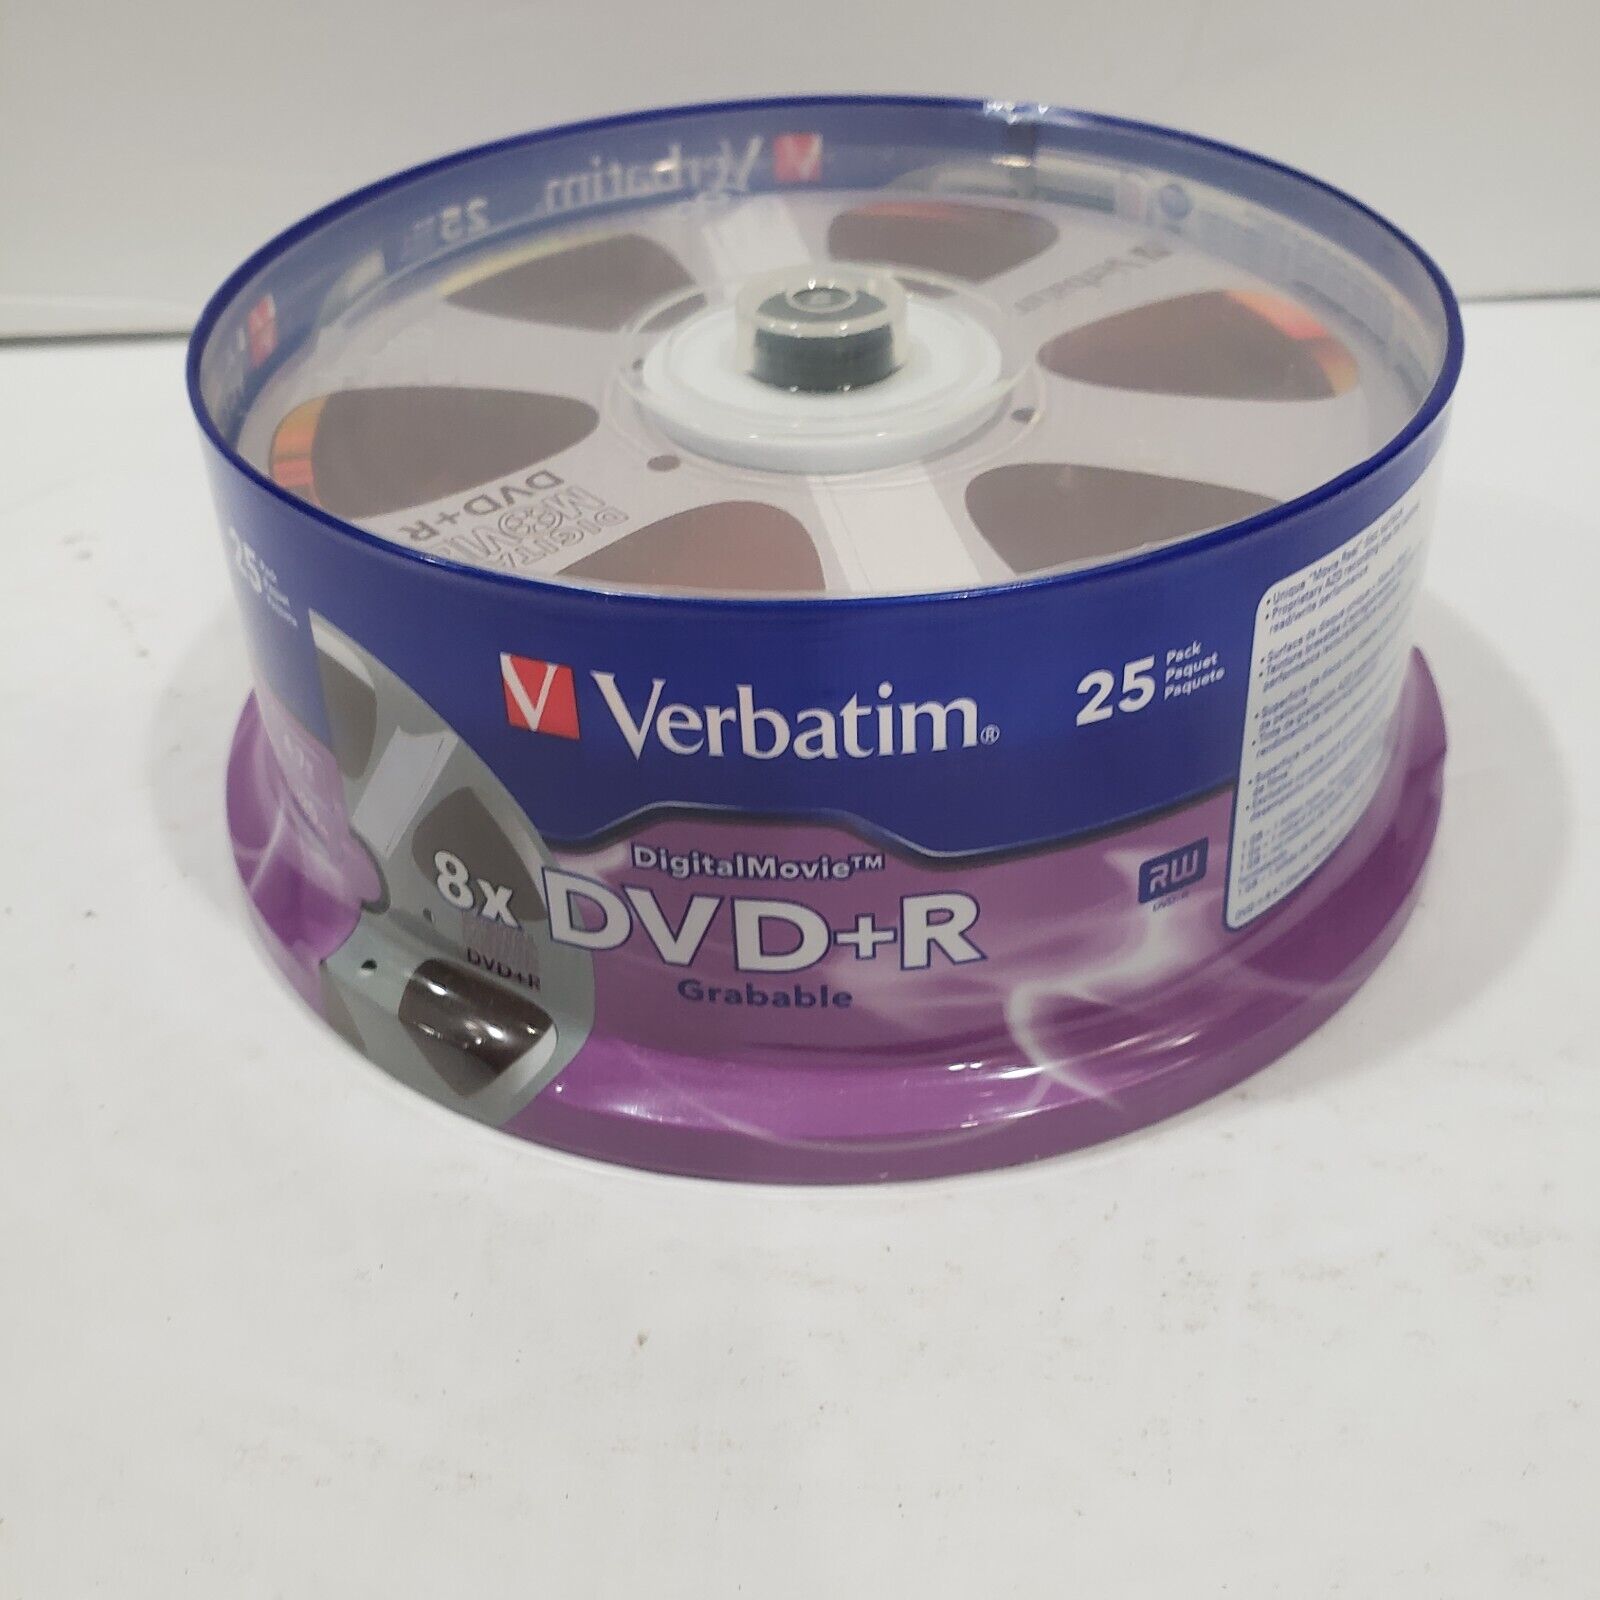 Verbatim ~ Digital Movie DVD-R -25 Pack - 4.7 GB/120 Min/4x  Sealed NEW Verbatim Corporation 94865